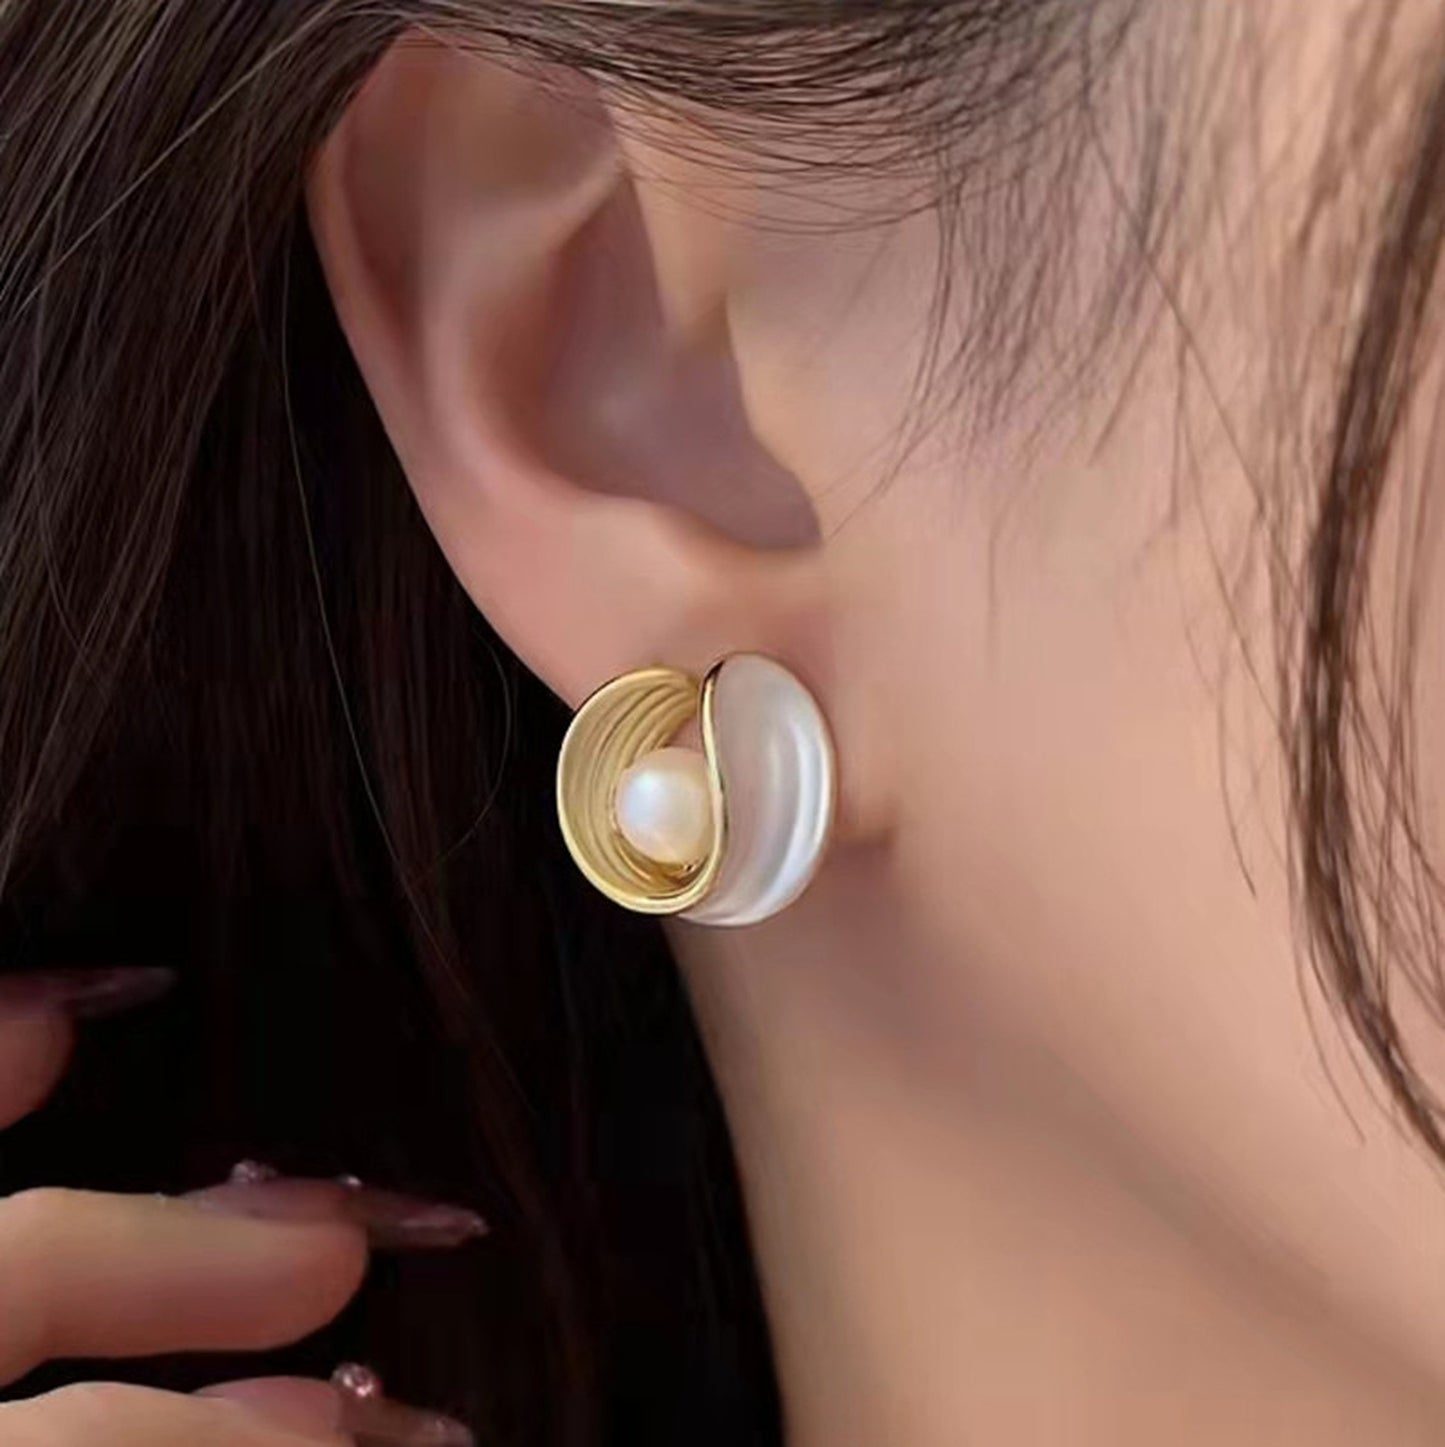 Mother of pearl earrings, Pearl stud earrings, Sea shell earrings, Unique earrings, Infinity loop earrings, Summer vacation jewelry,Handmade